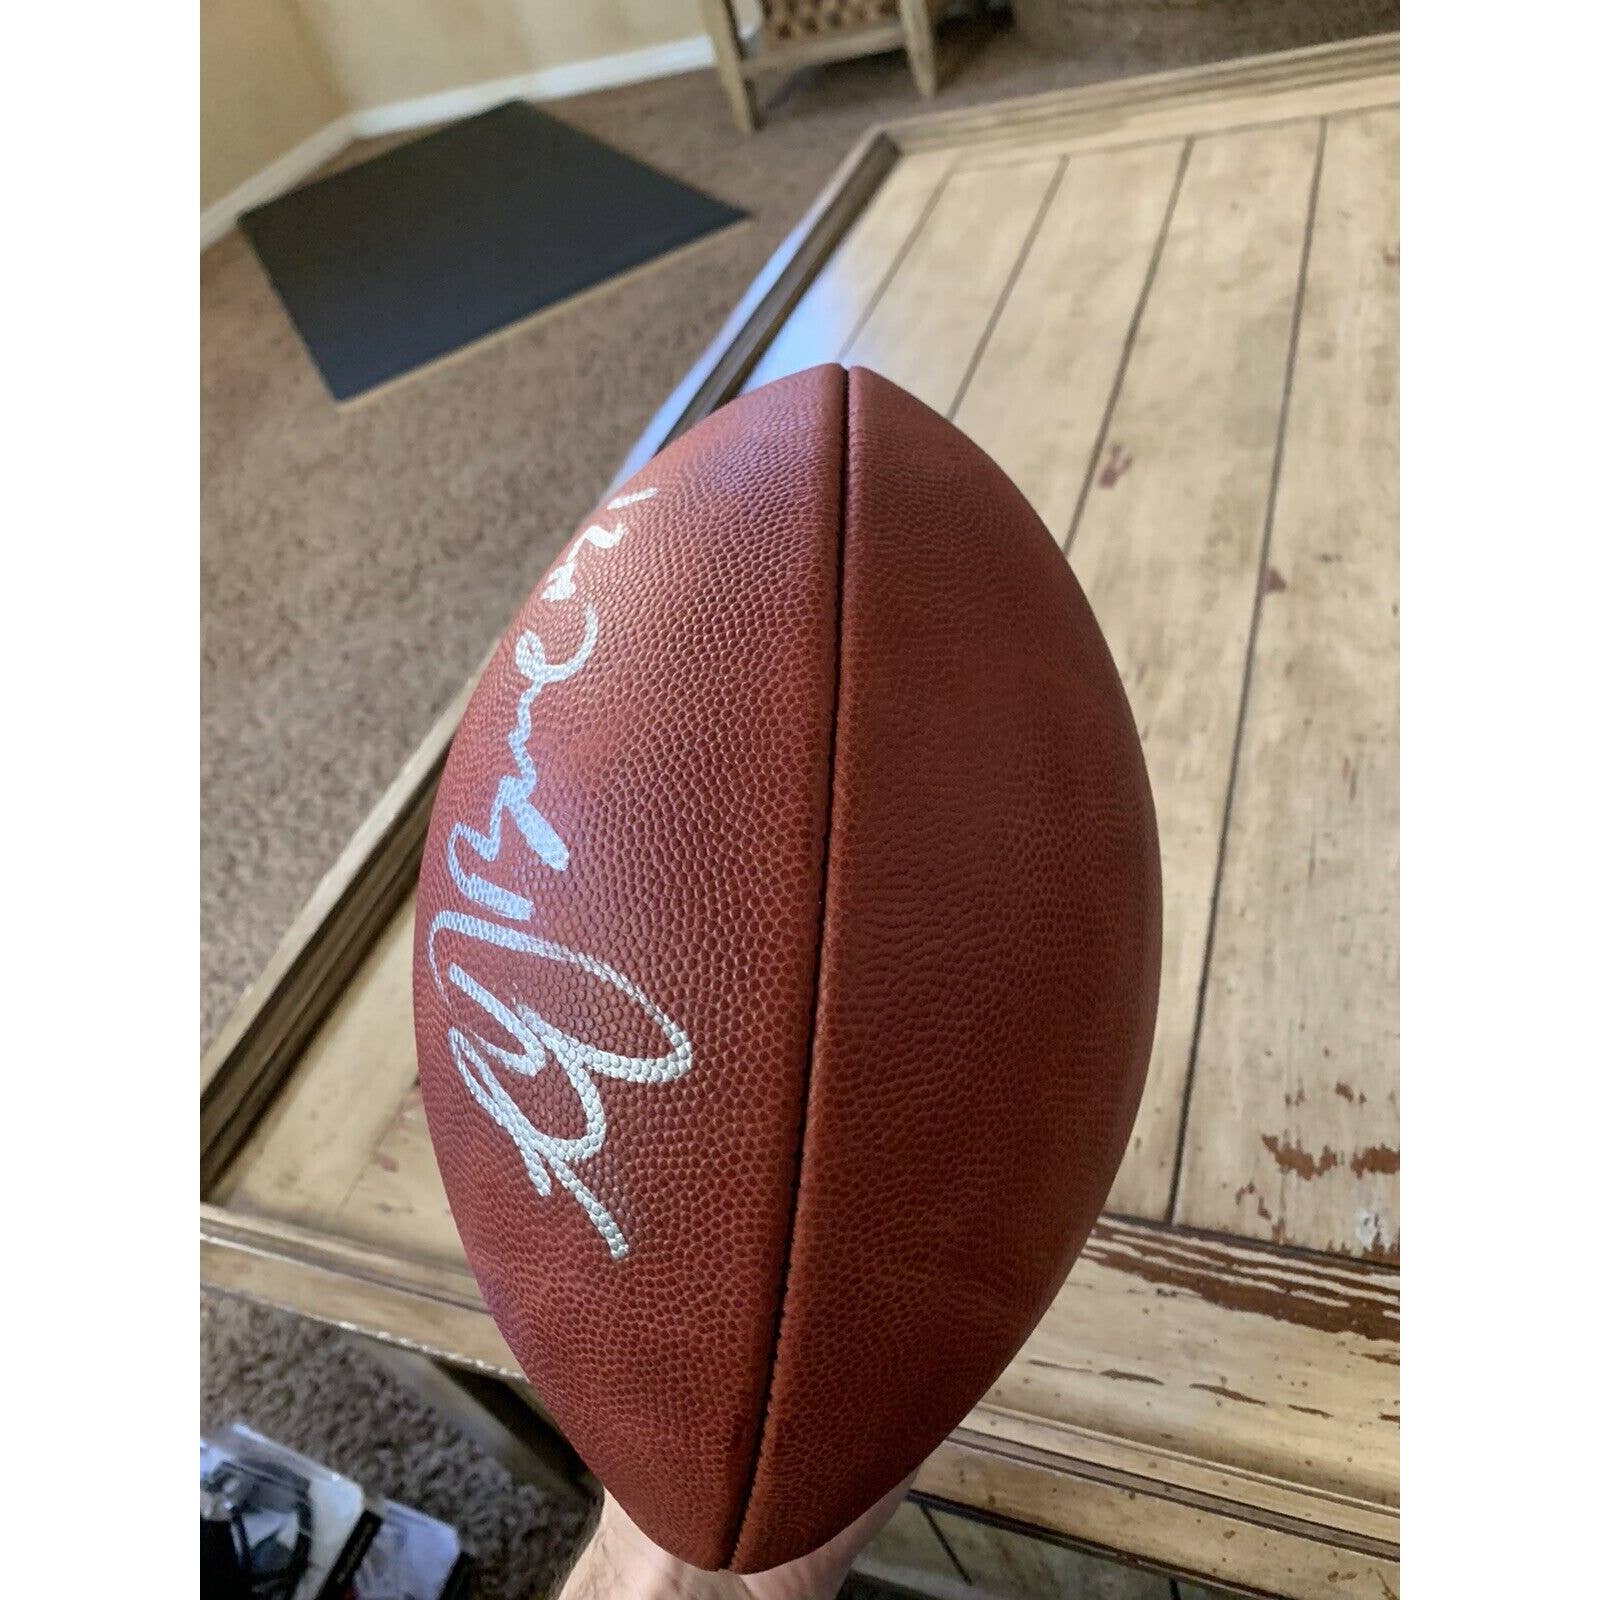 AJ Bouye Autographed/Signed Duke Football PSA/DNA Jacksonville Jaguars A J - TreasuresEvolved